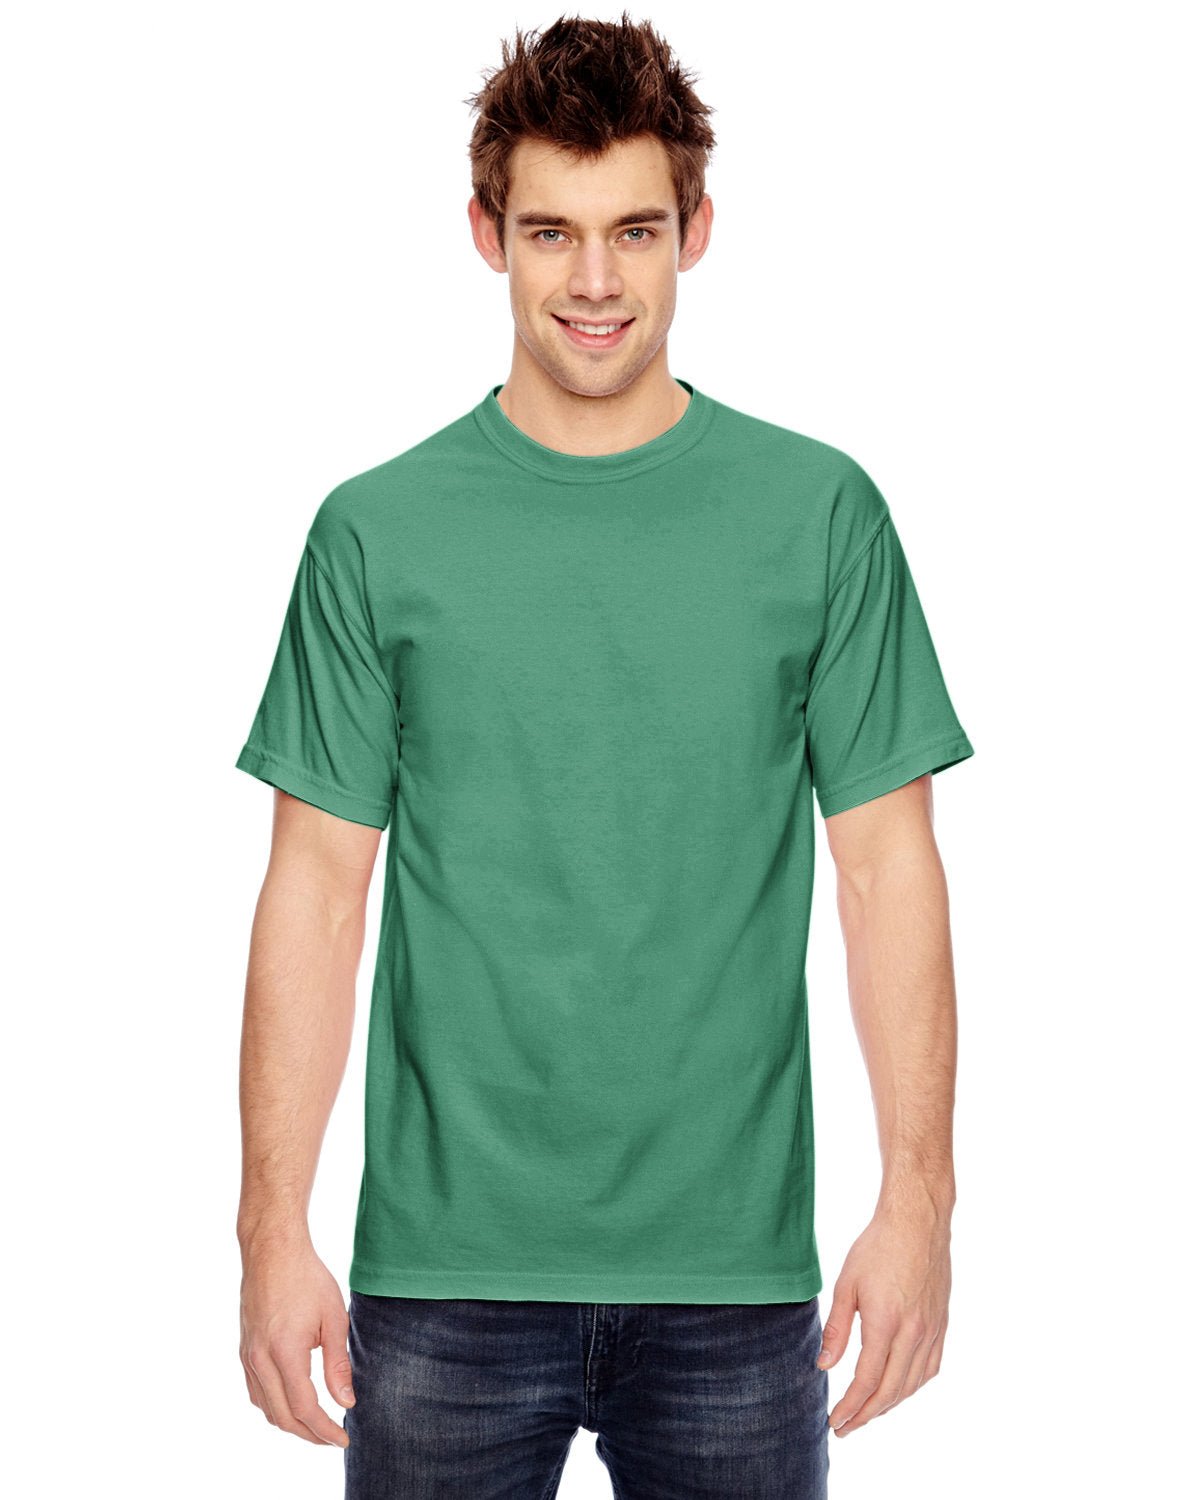 C1717-Comfort Colors-ISLAND GREEN-Comfort Colors-T-Shirts-1